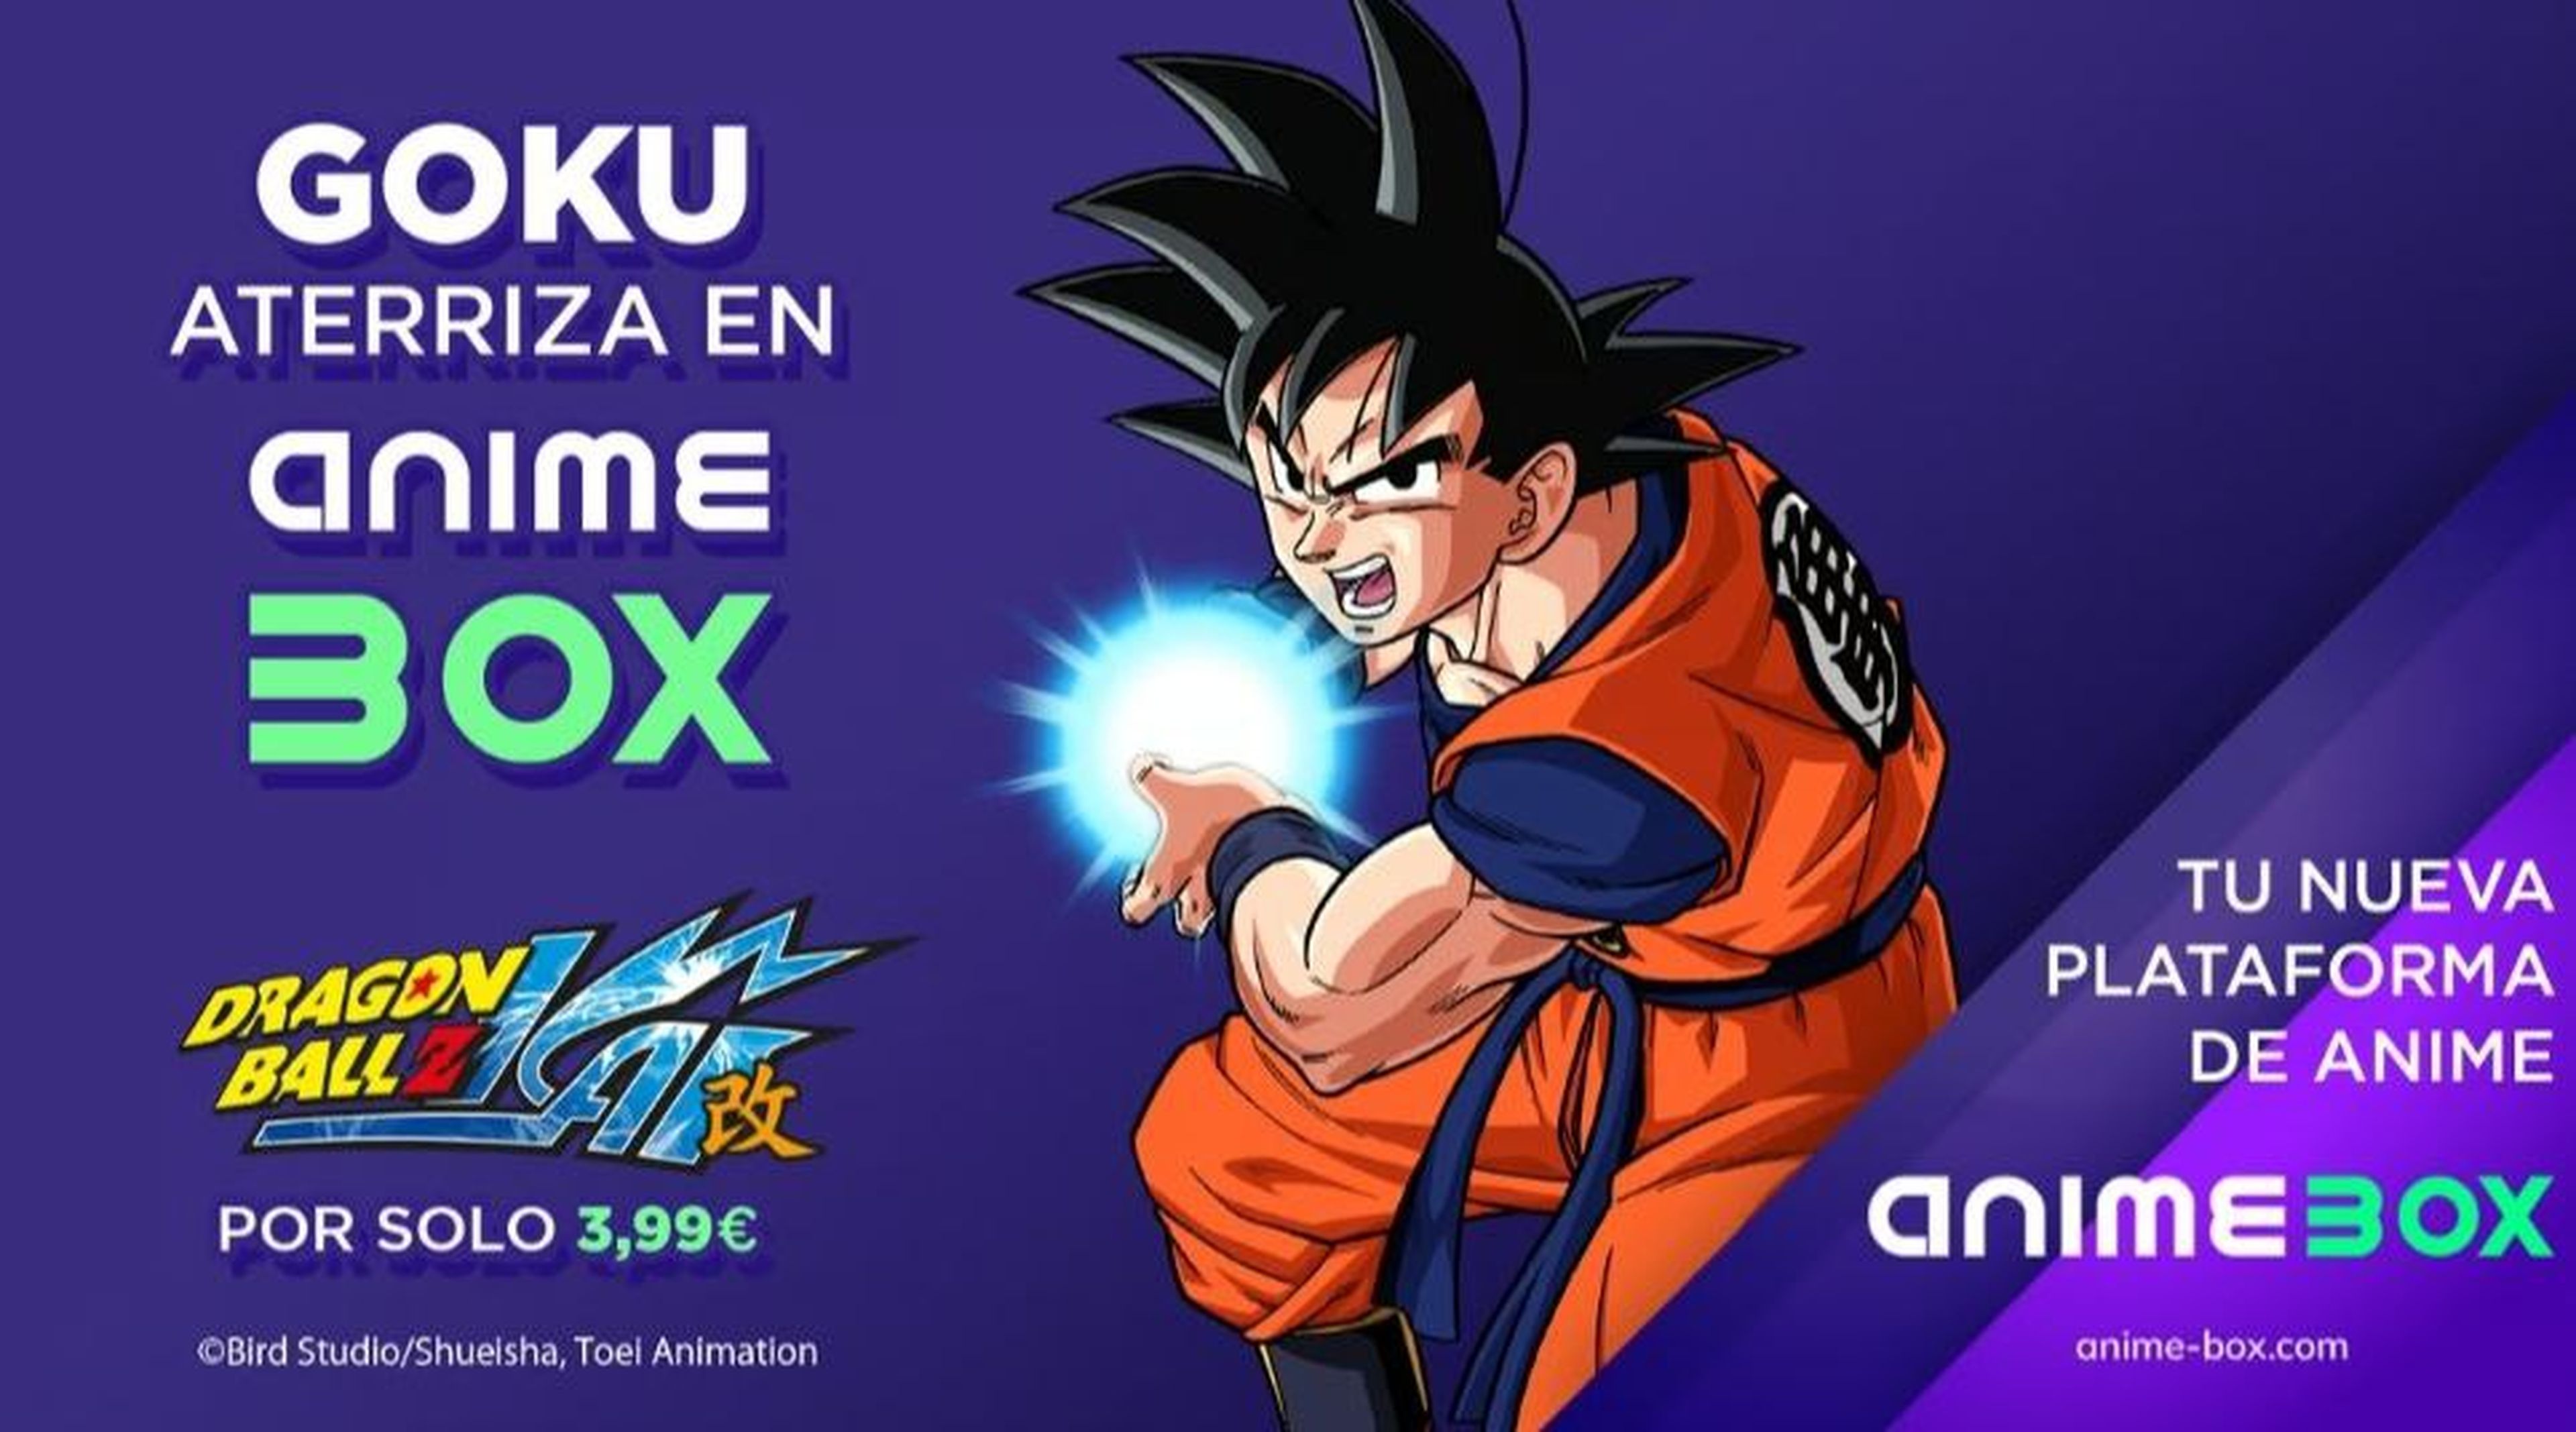 Desvelada la fecha de estreno de Dragon Ball Z Kai en Anime Box, la serie de Akira Toriyama que llevabas años esperando 